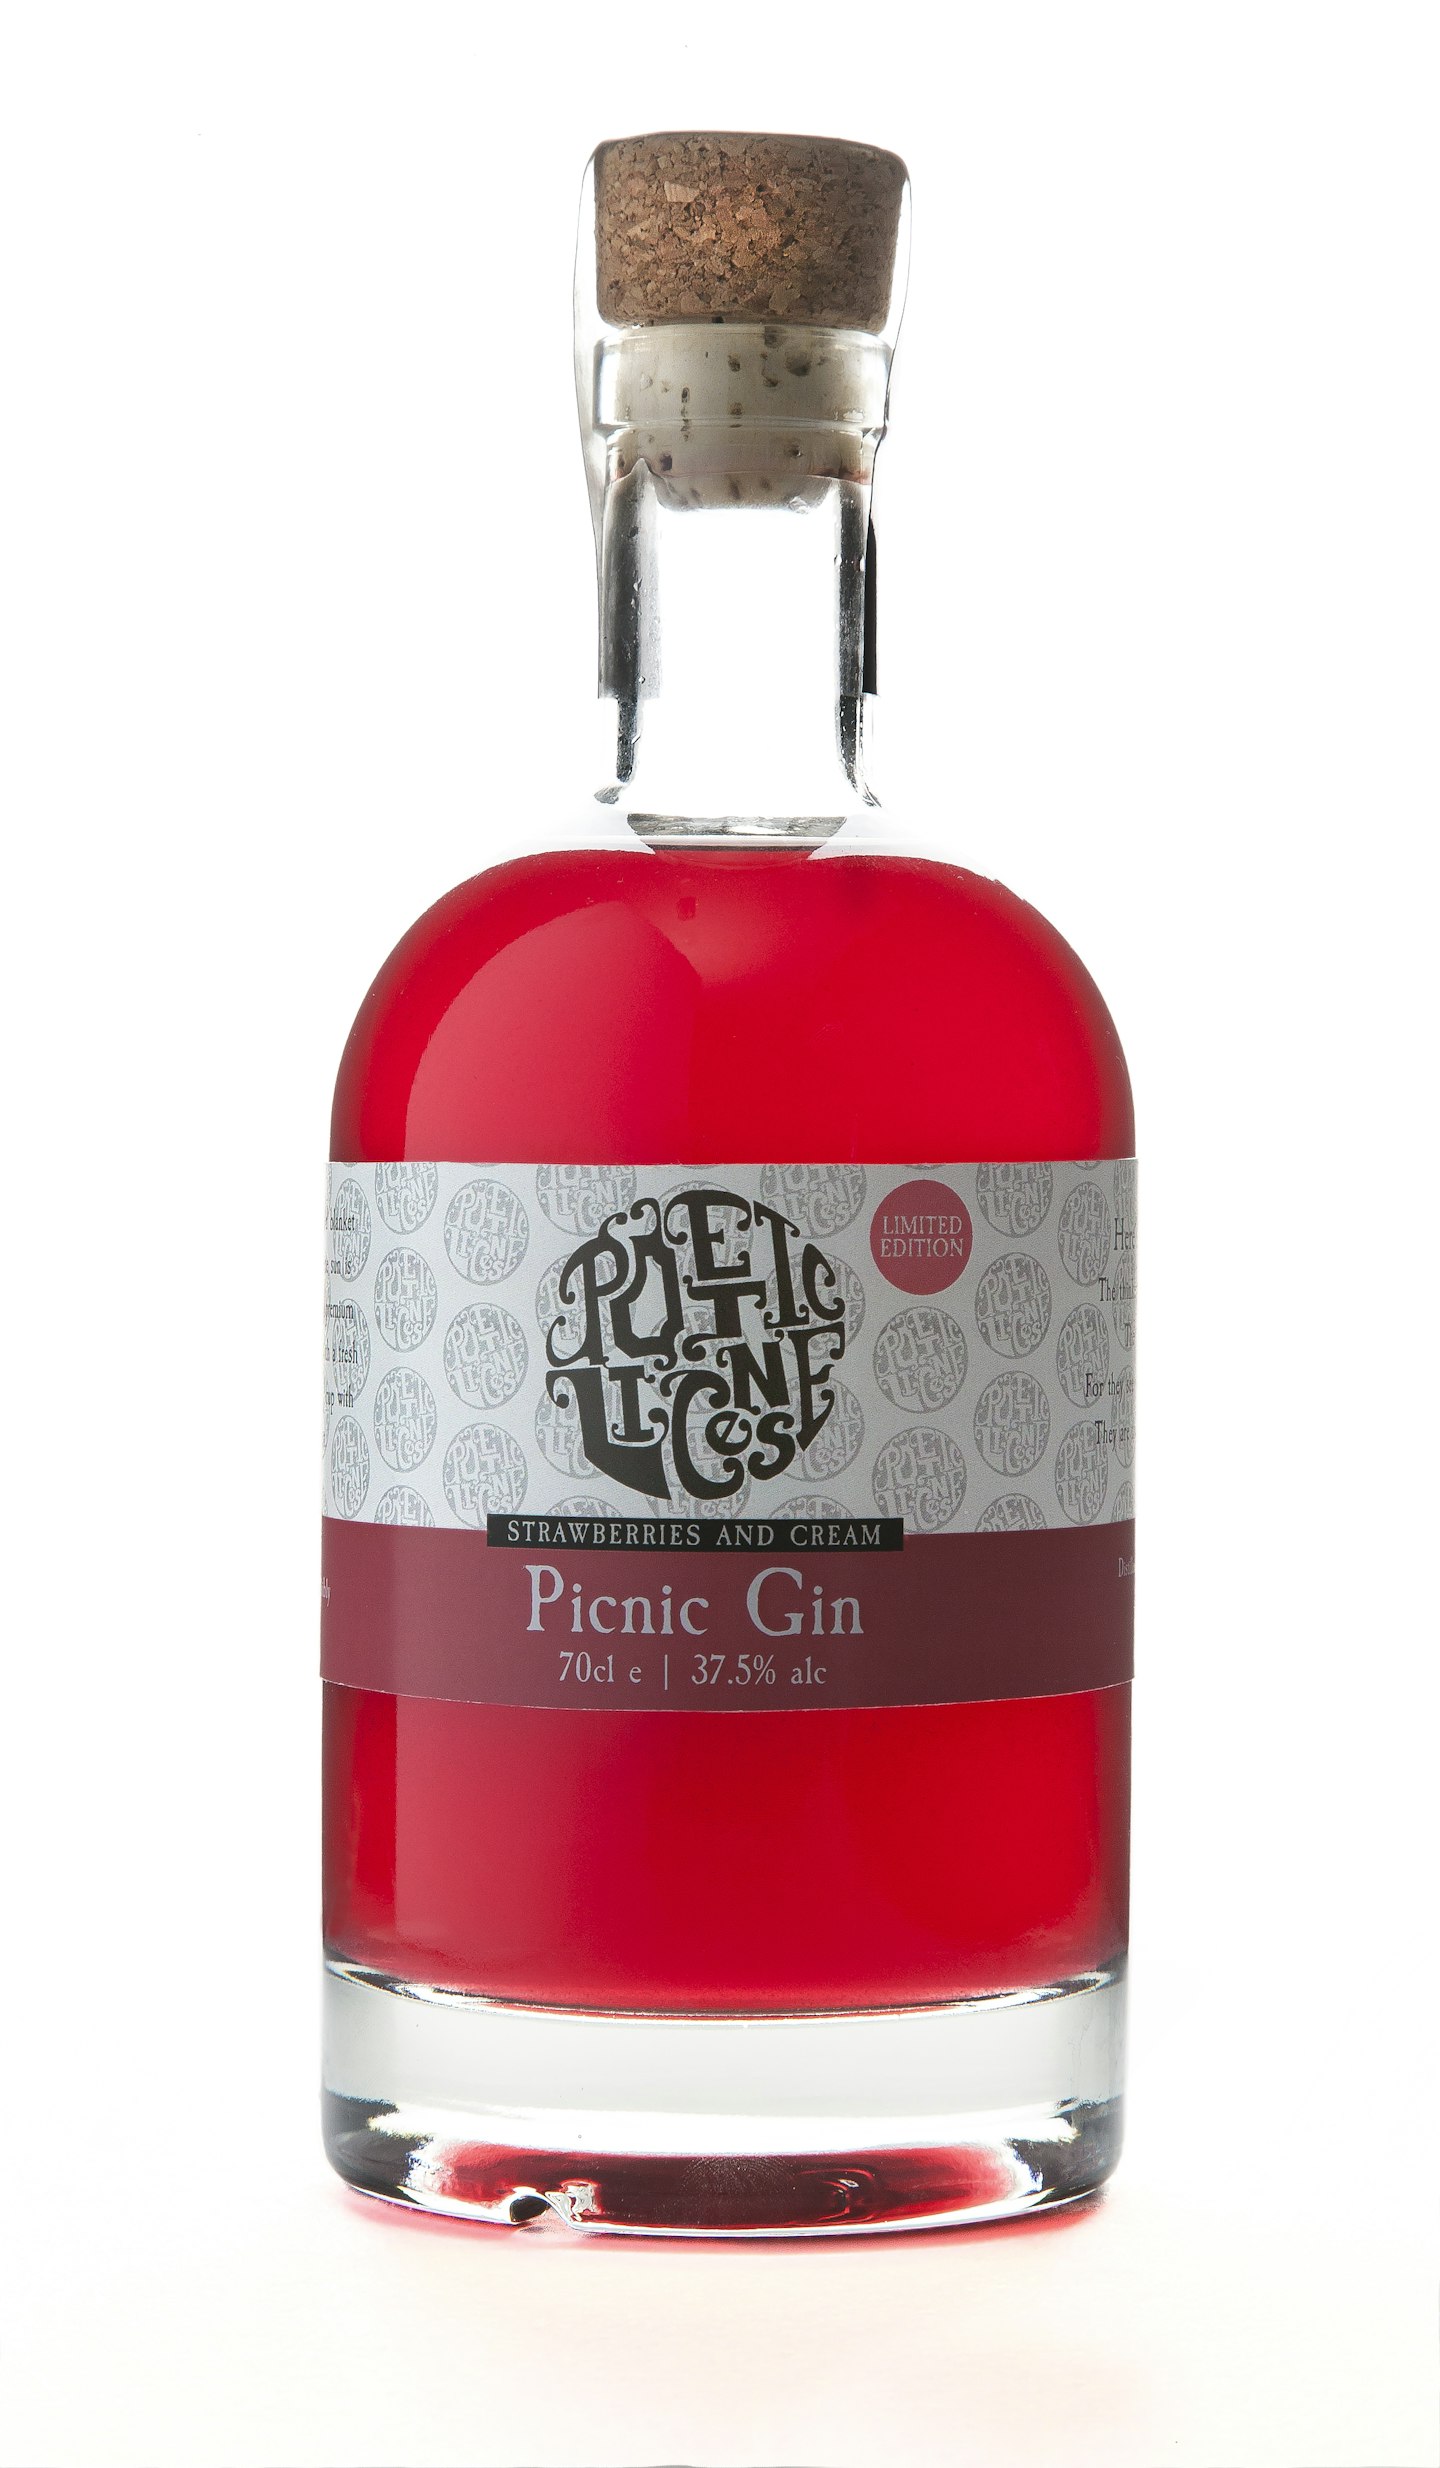 32.50 Picnic Gin Strawberry, www.poeticlicensedistillery.co.uk